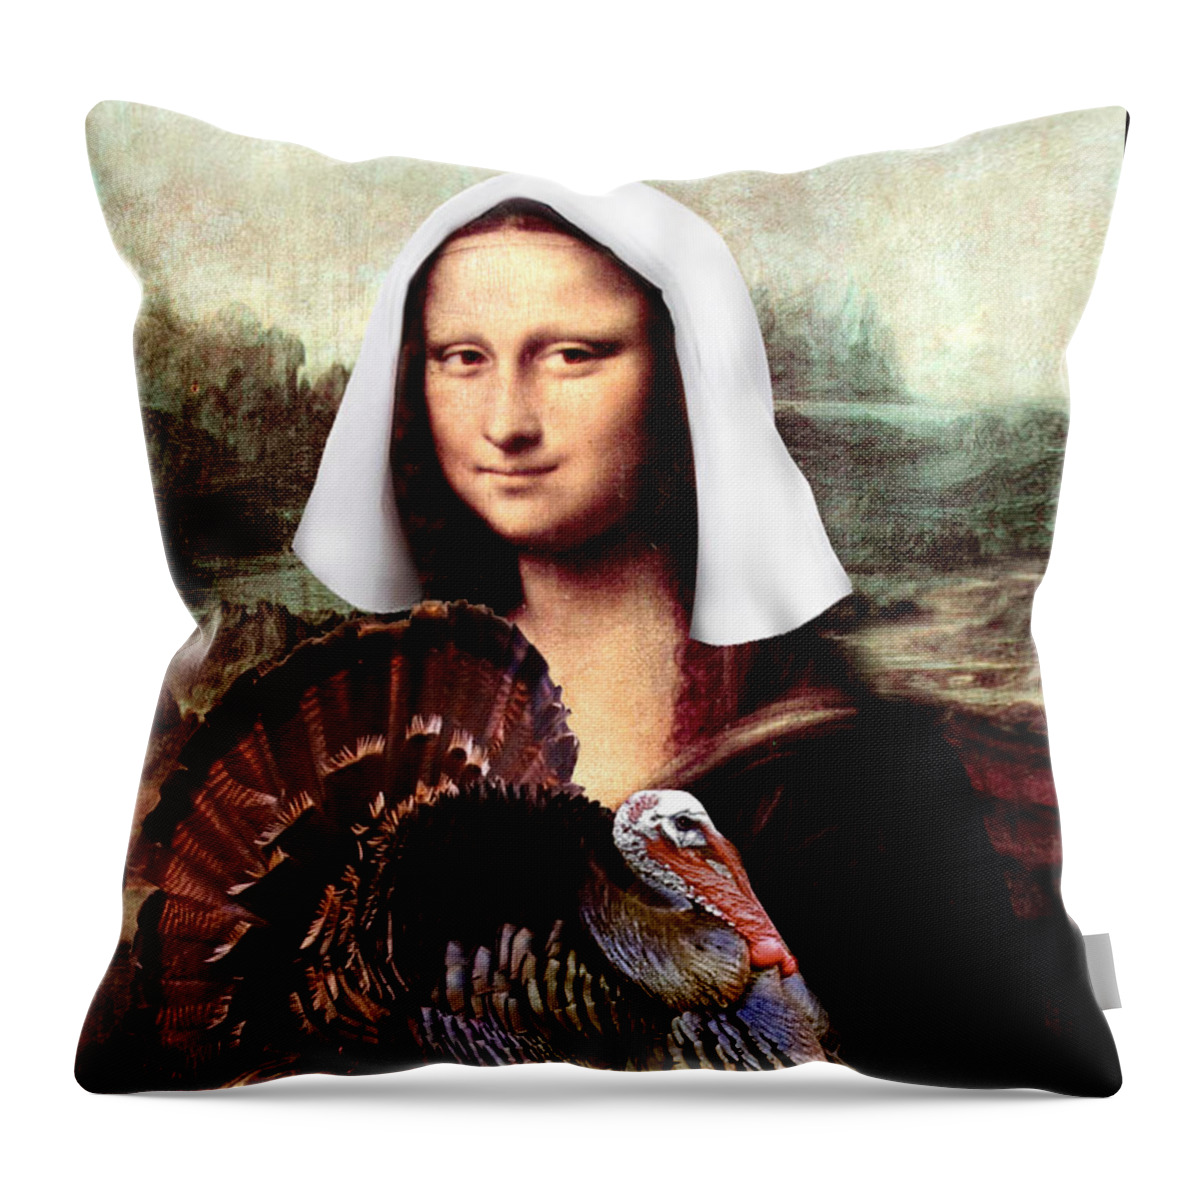 Pilgrim Throw Pillow featuring the digital art Mona Lisa Thanksgiving Pilgrim by Gravityx9 Designs